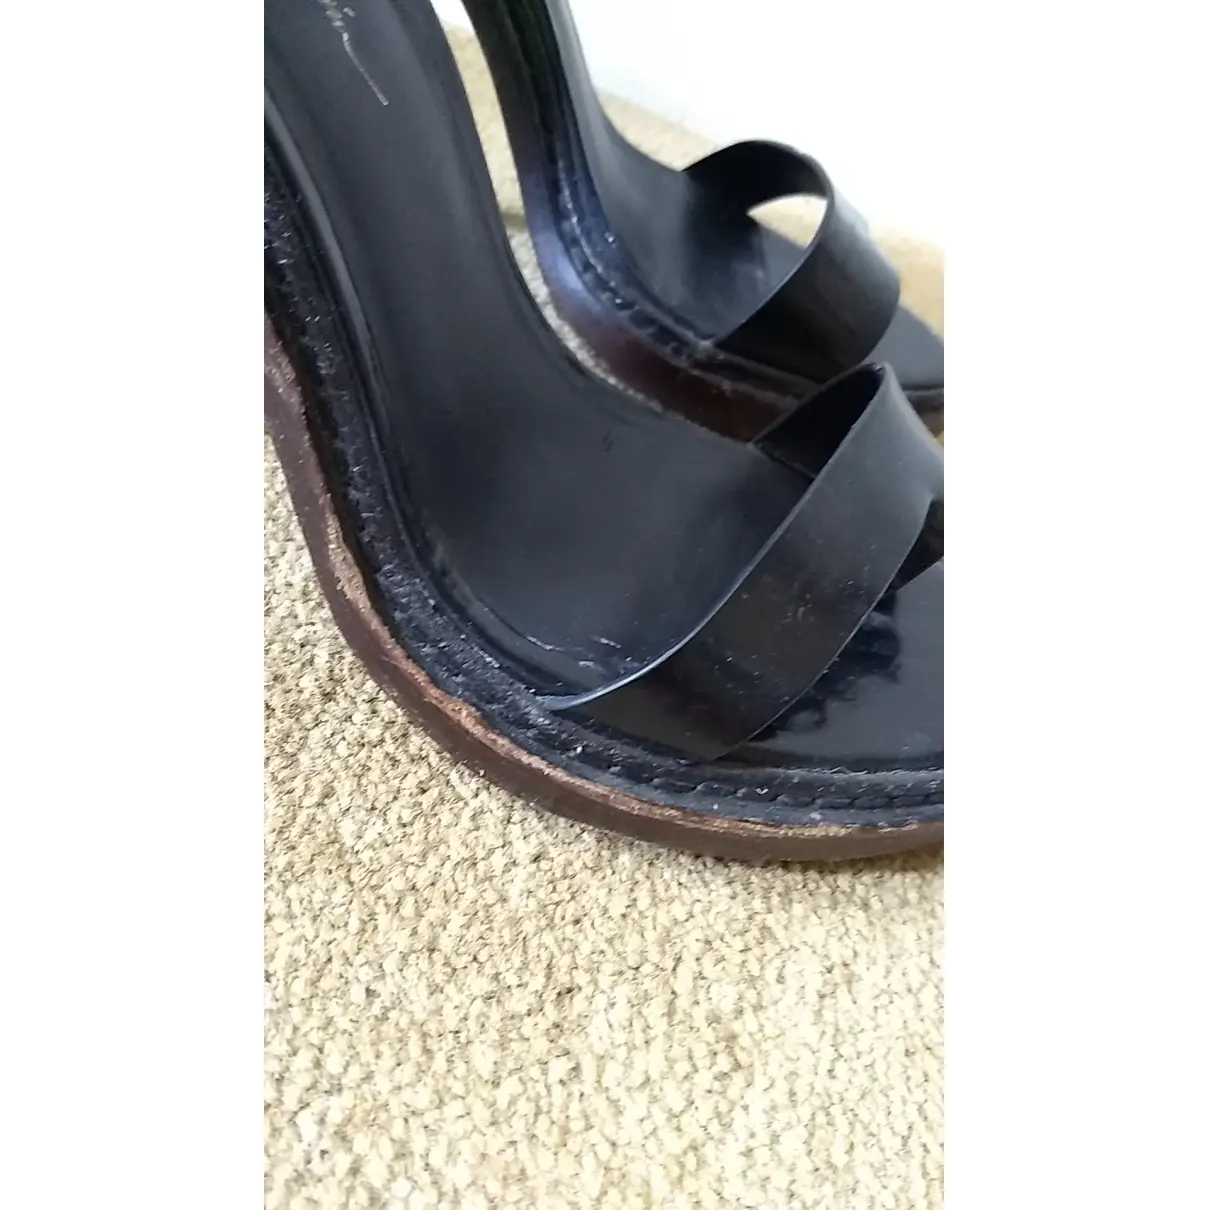 Patent leather heels 3.1 Phillip Lim